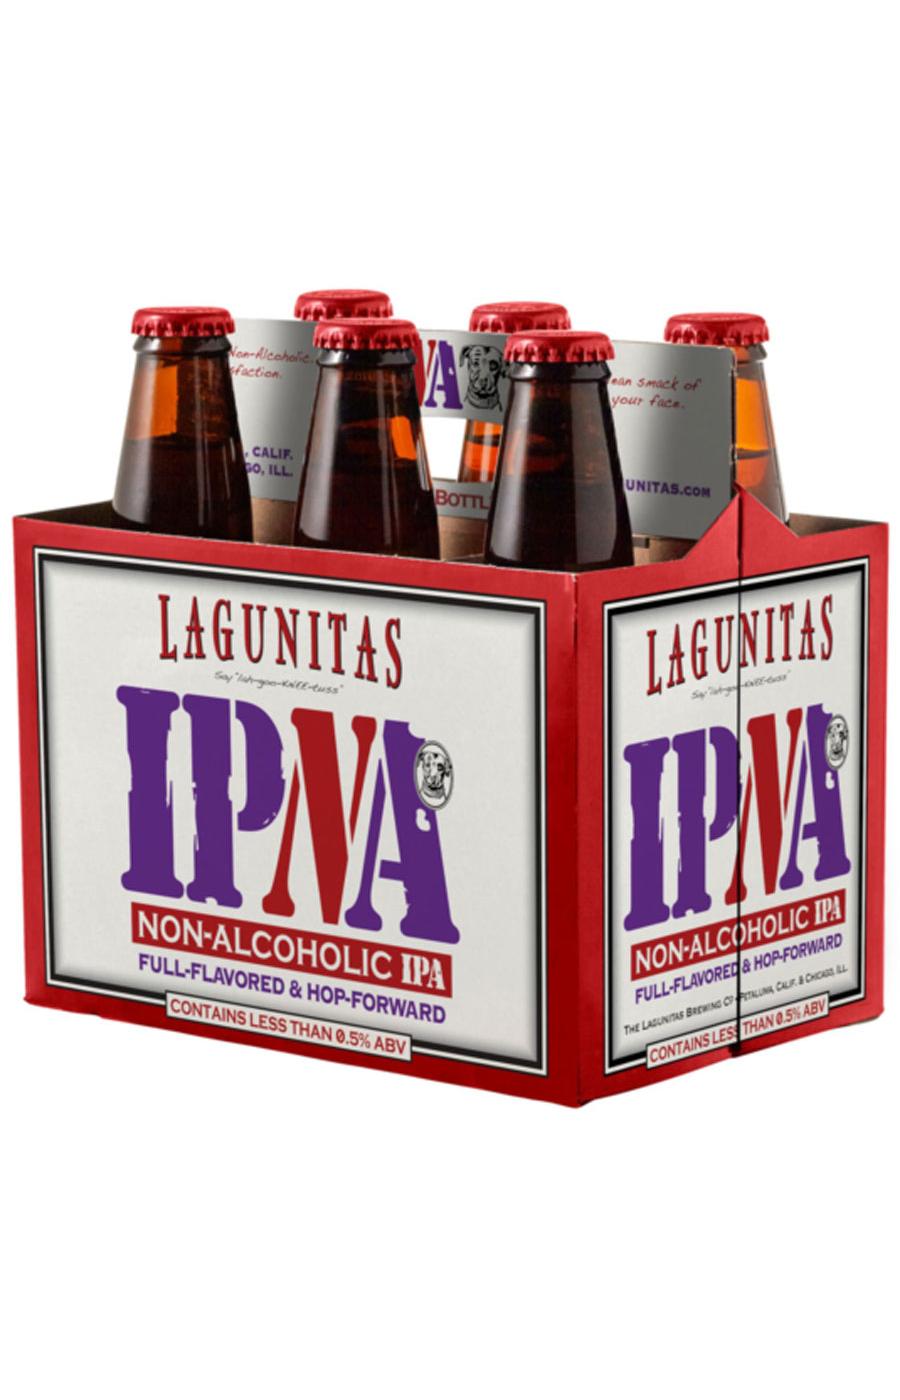 Lagunitas IPNA Non-alcoholic IPA 12 oz Bottles; image 2 of 2